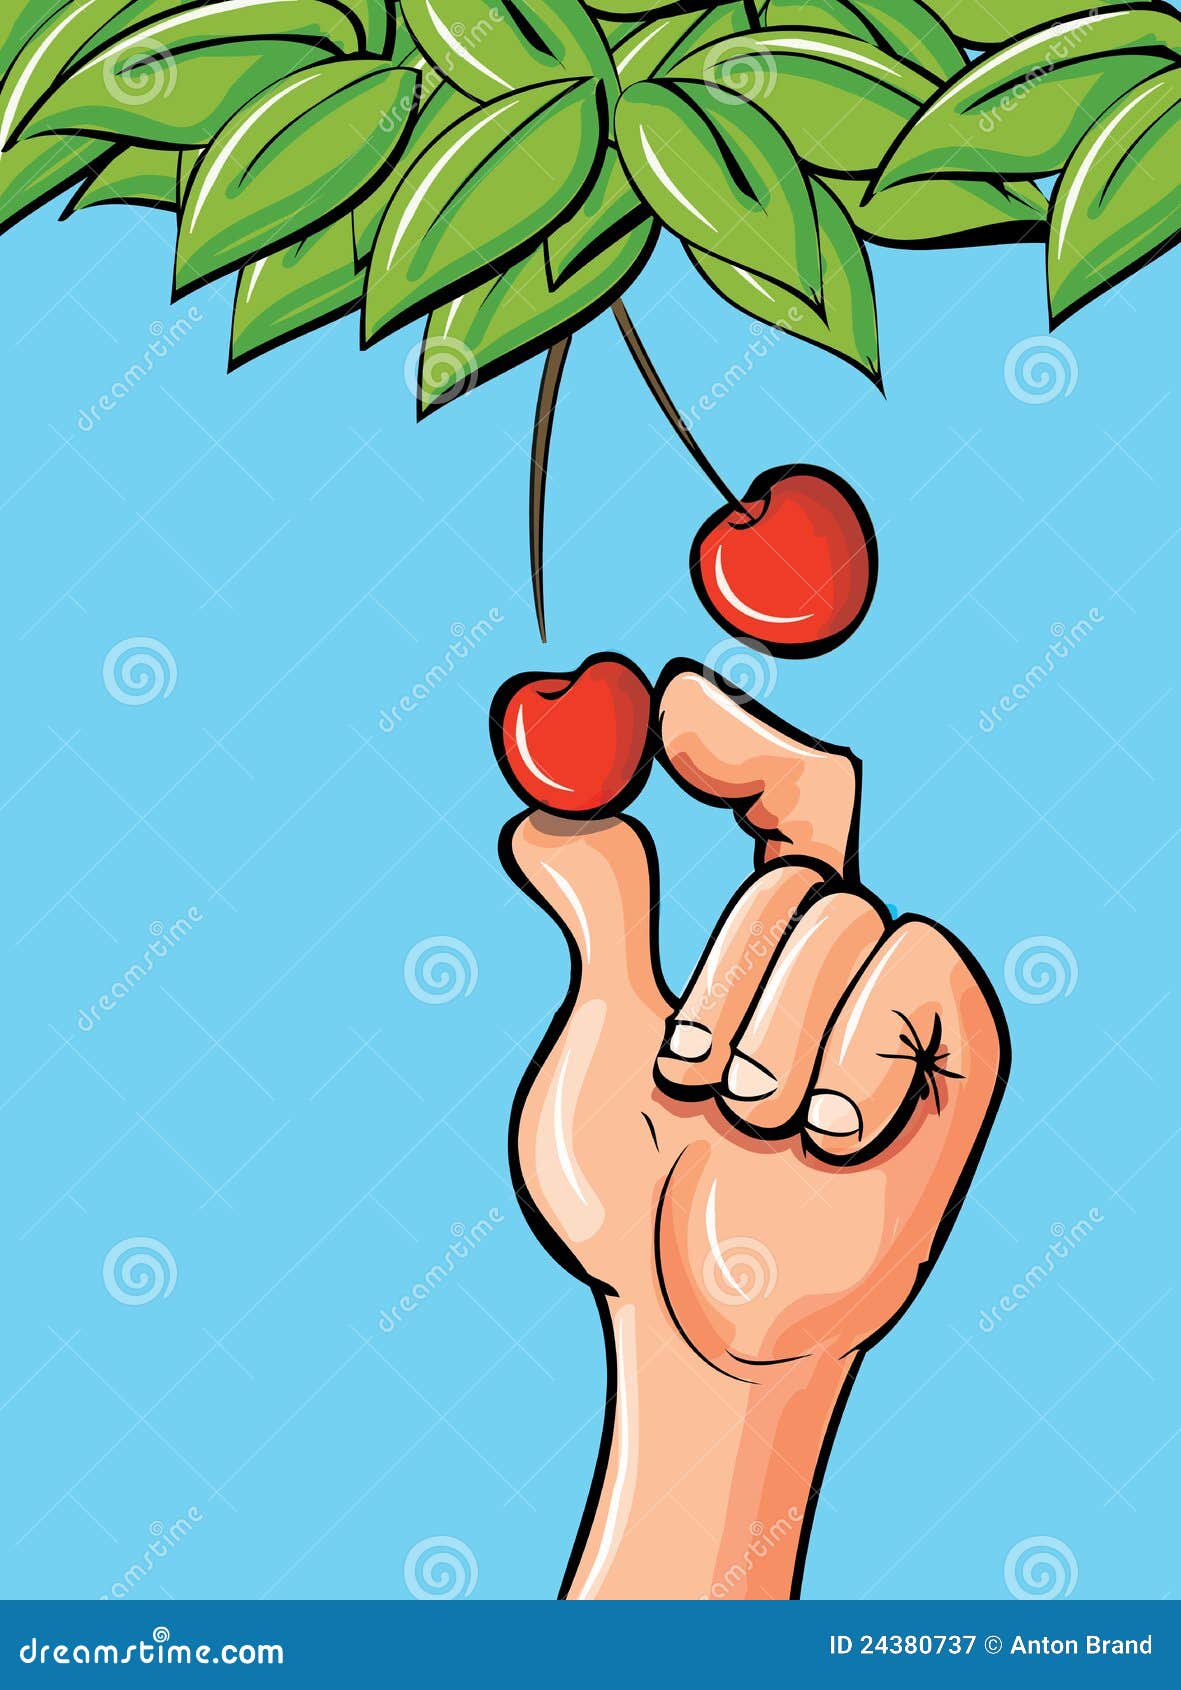 cartoon hand picking a cherry